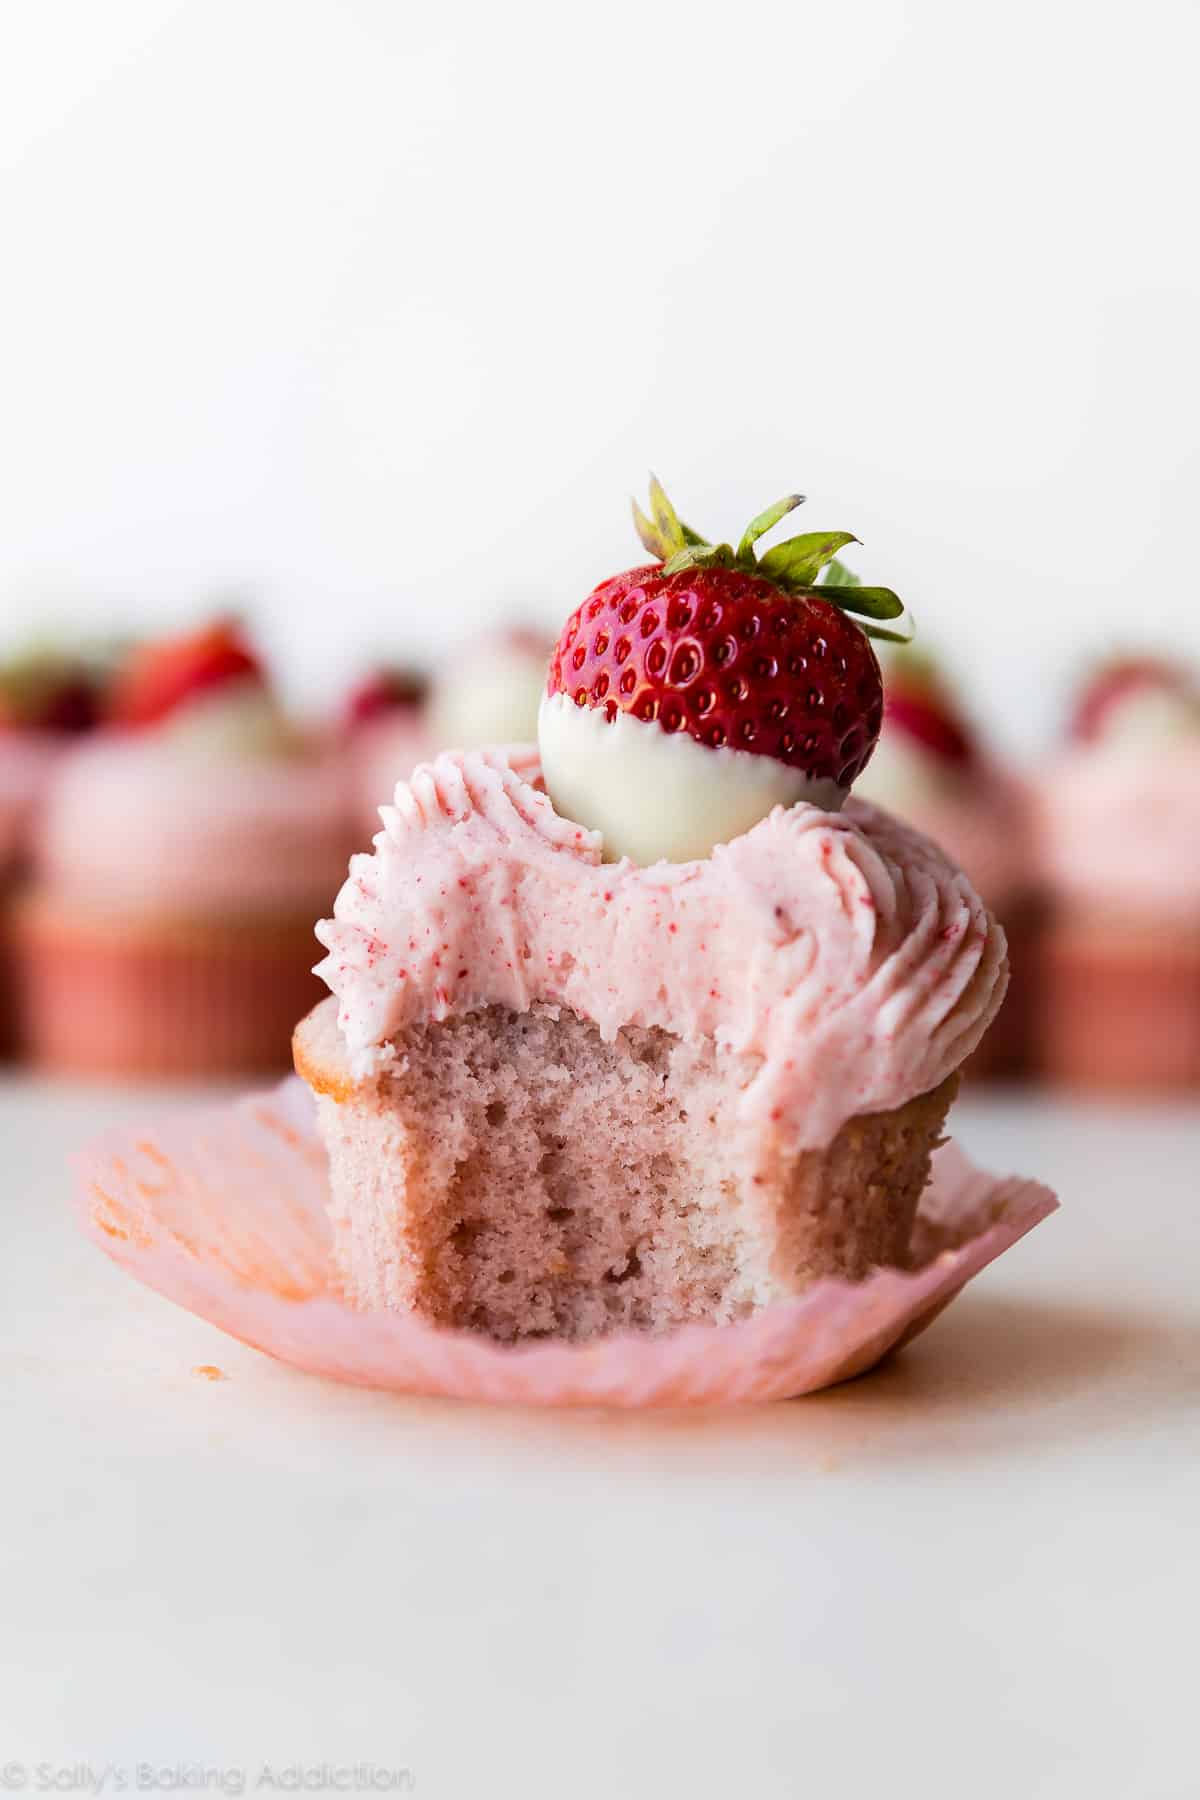 strawberry cupcake with white chocolate frosting and a white chocolate dipped strawberry